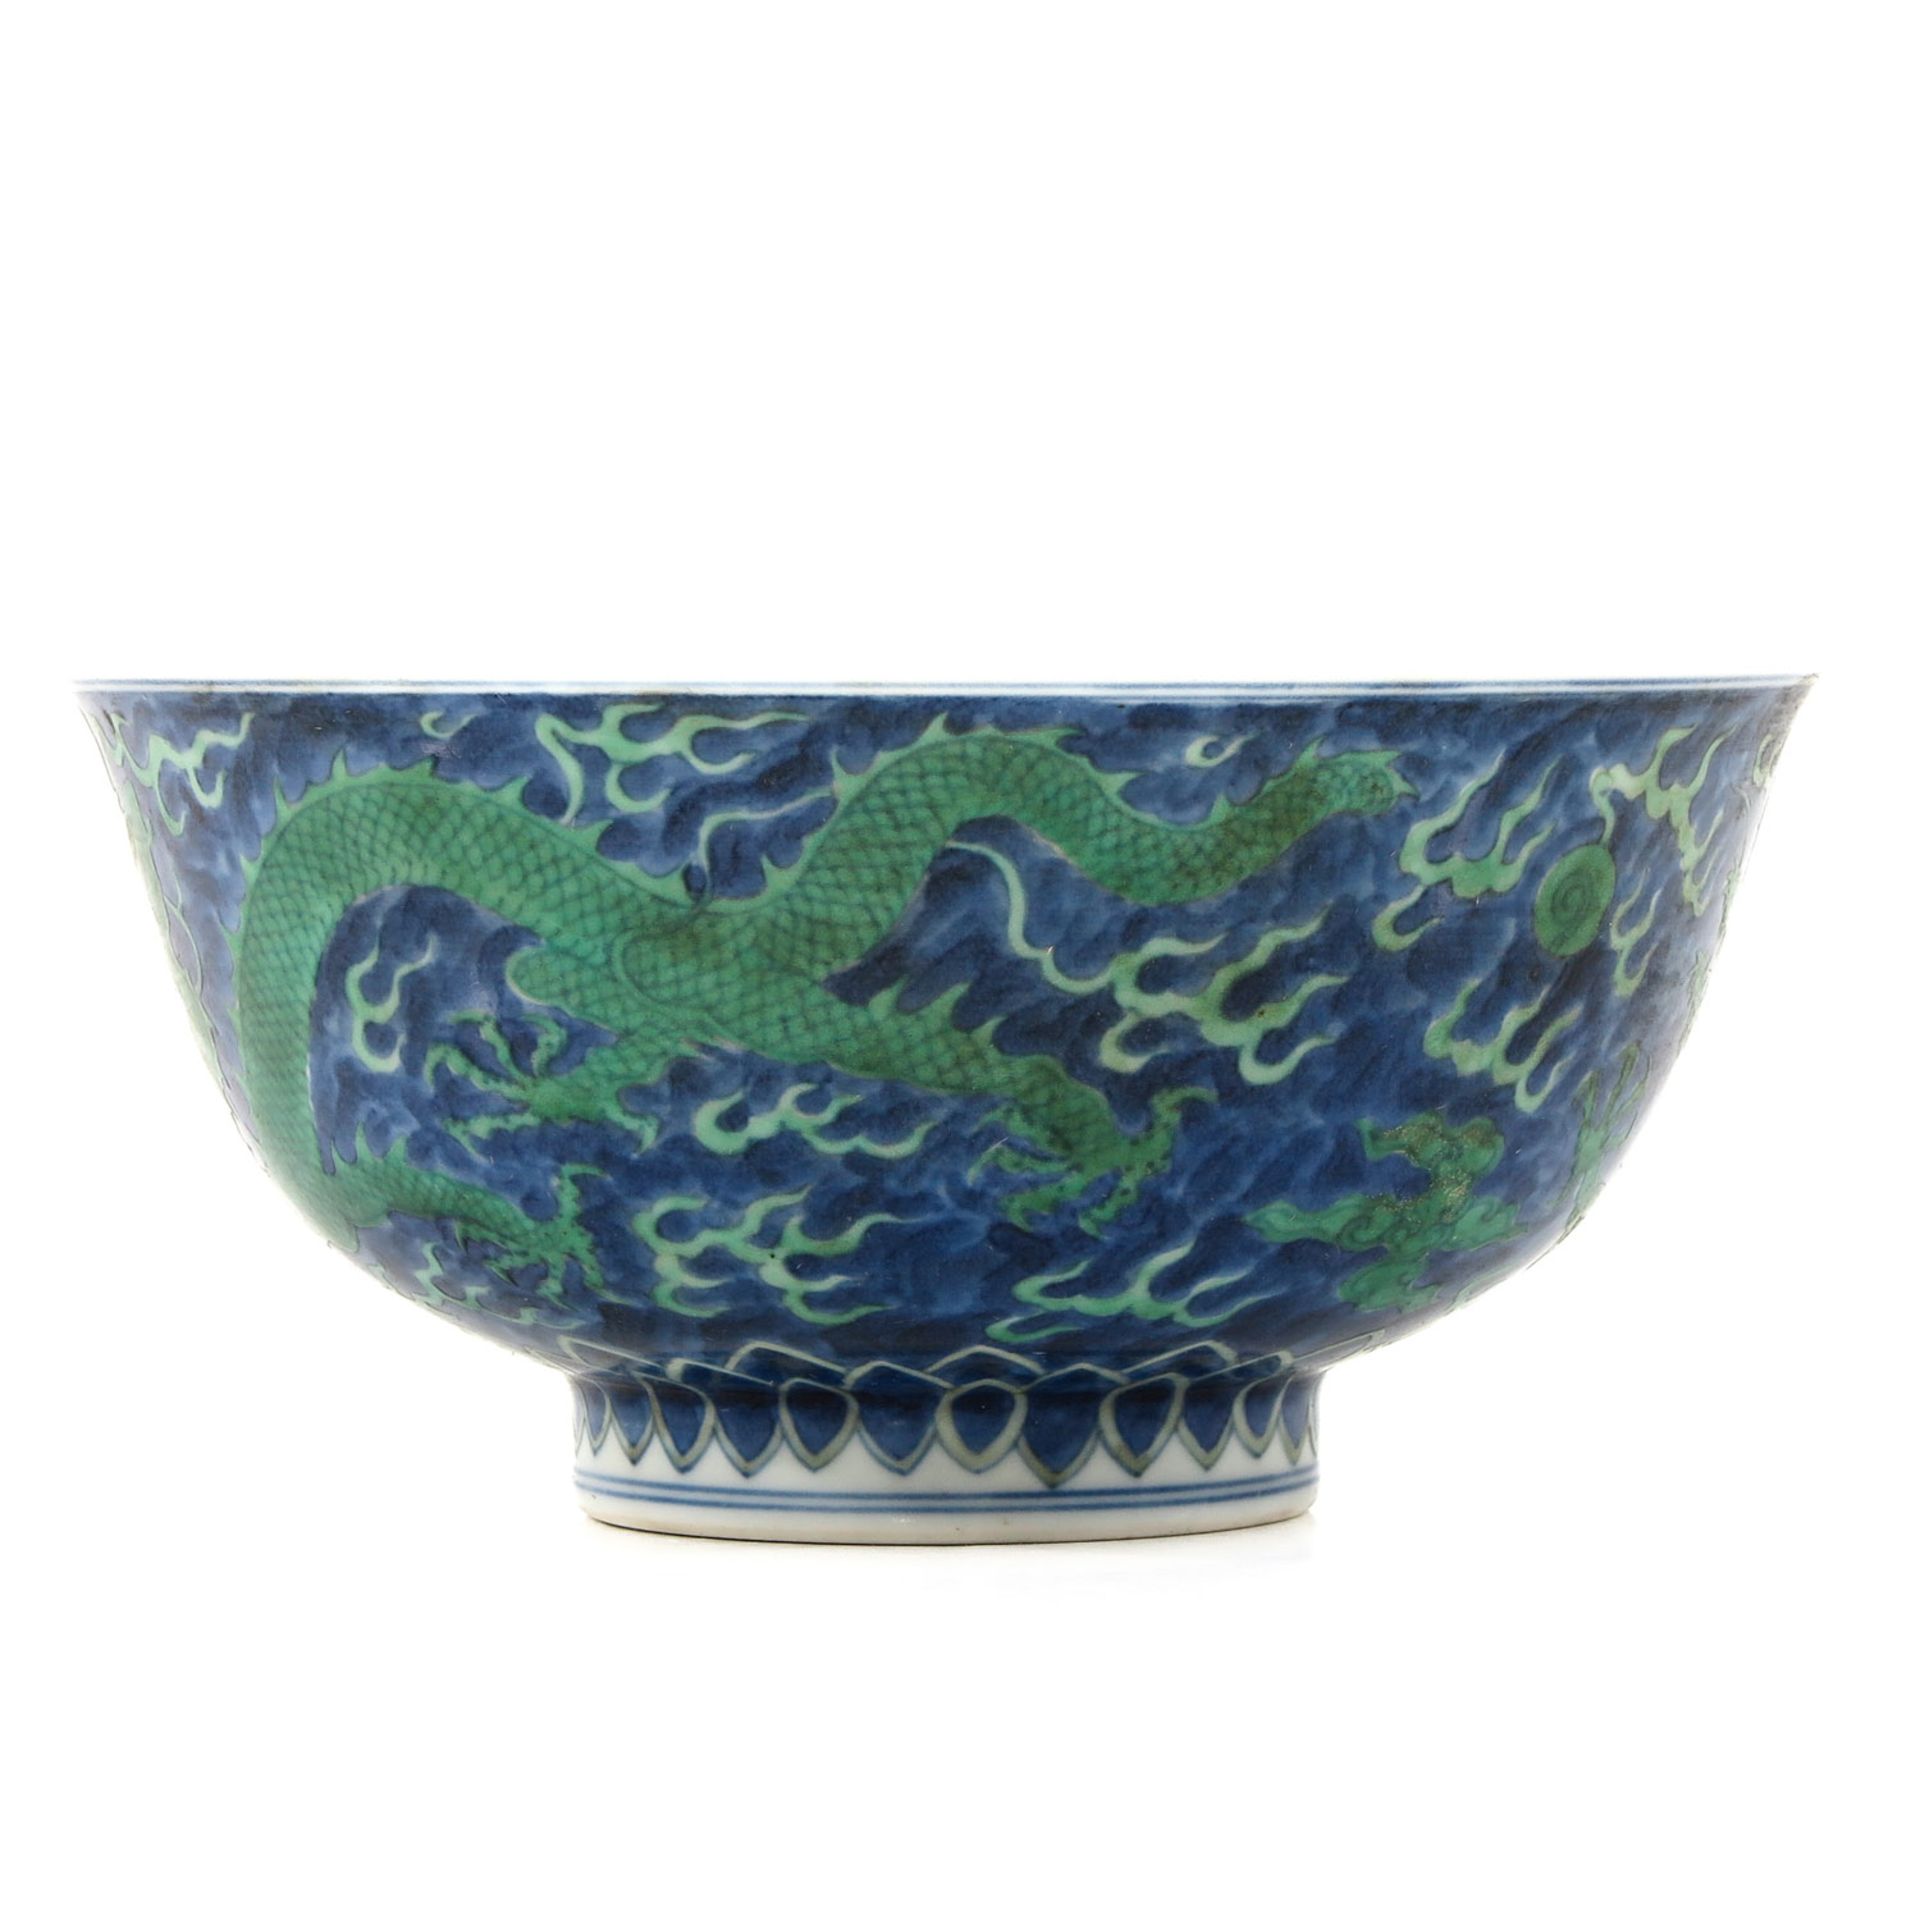 A Dragon Decor Bowl - Image 2 of 9